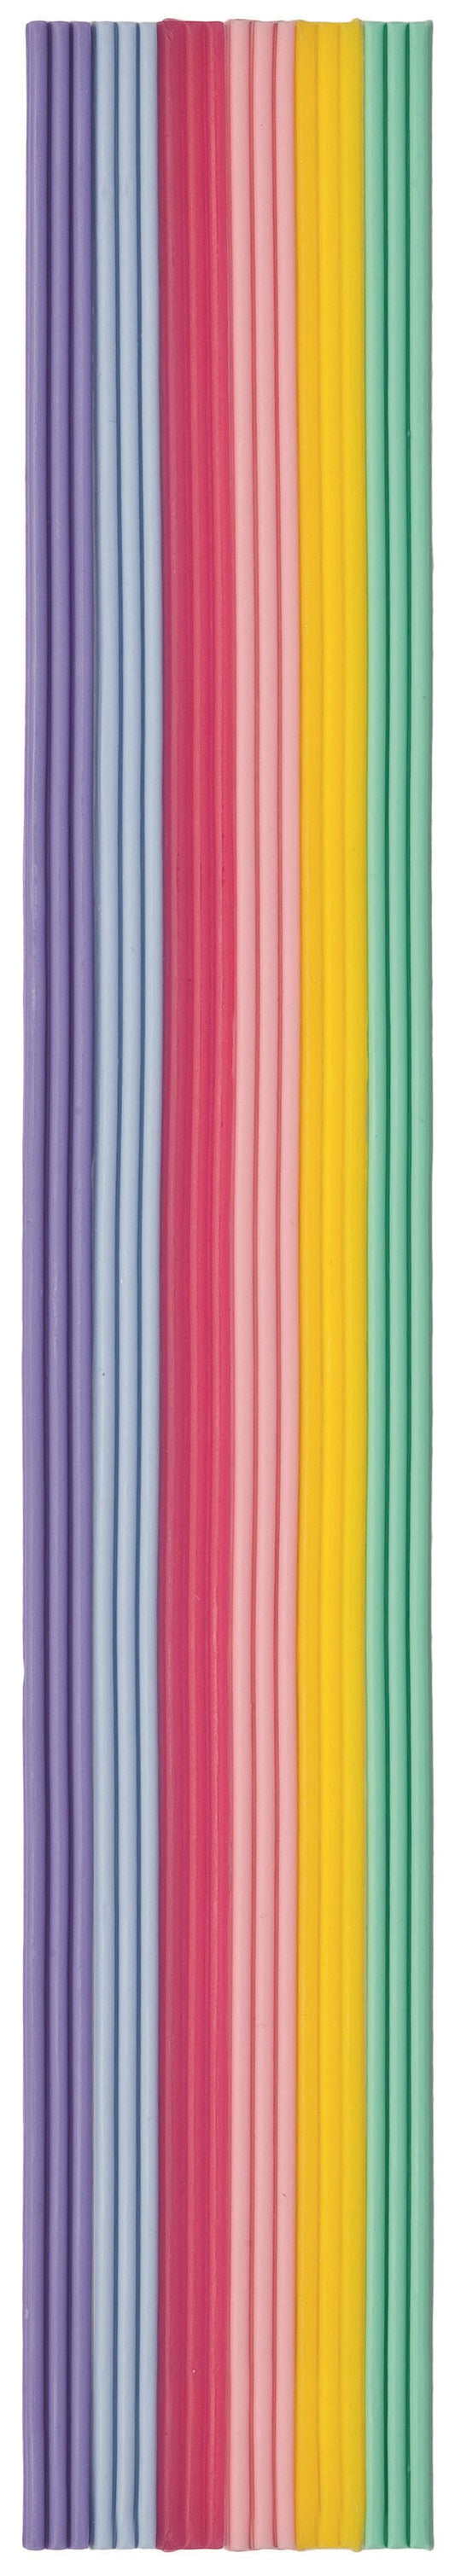 Verzierstreifen Regenbogen Pastell 230/20mm (Sortiert)